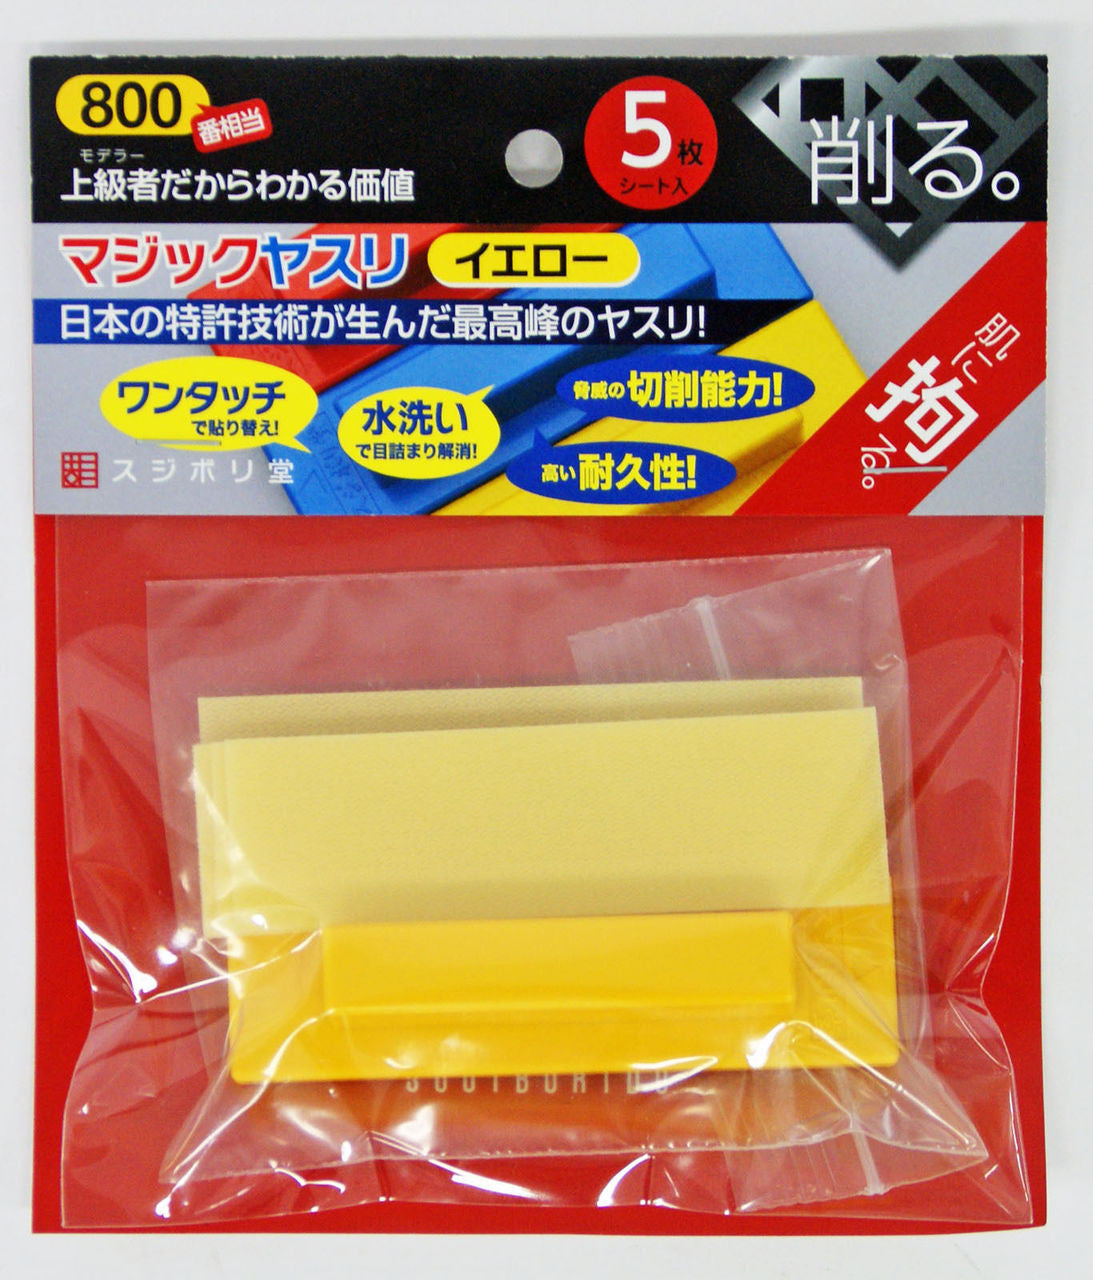 Sujiborido MAG030 Magic File (5pcs) w/ One Holder #800 Yellow - BanzaiHobby